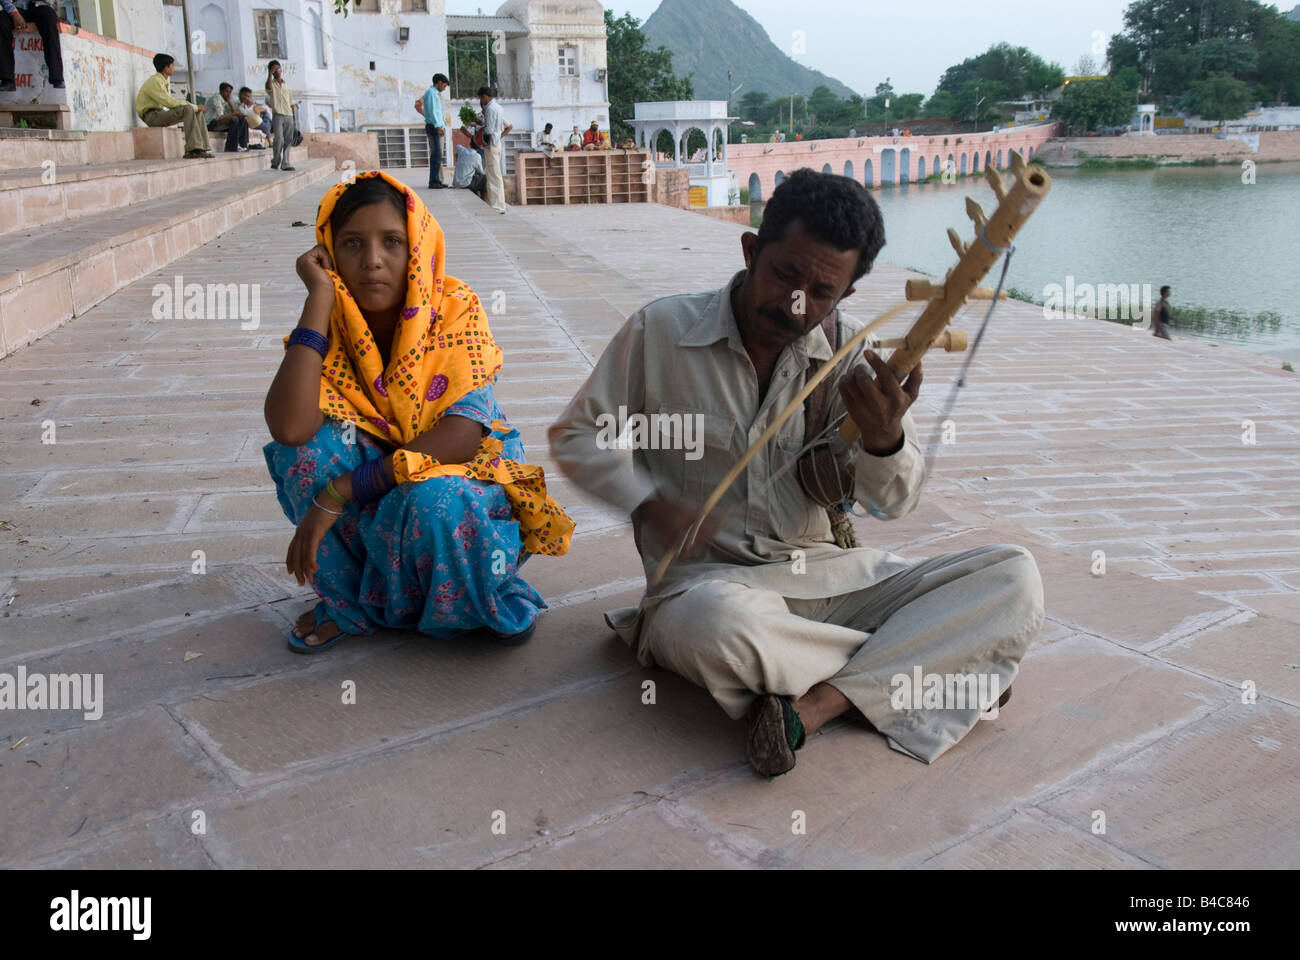 India Rajasthan Pushkar Playing music on the shore of the lake Stock Photo